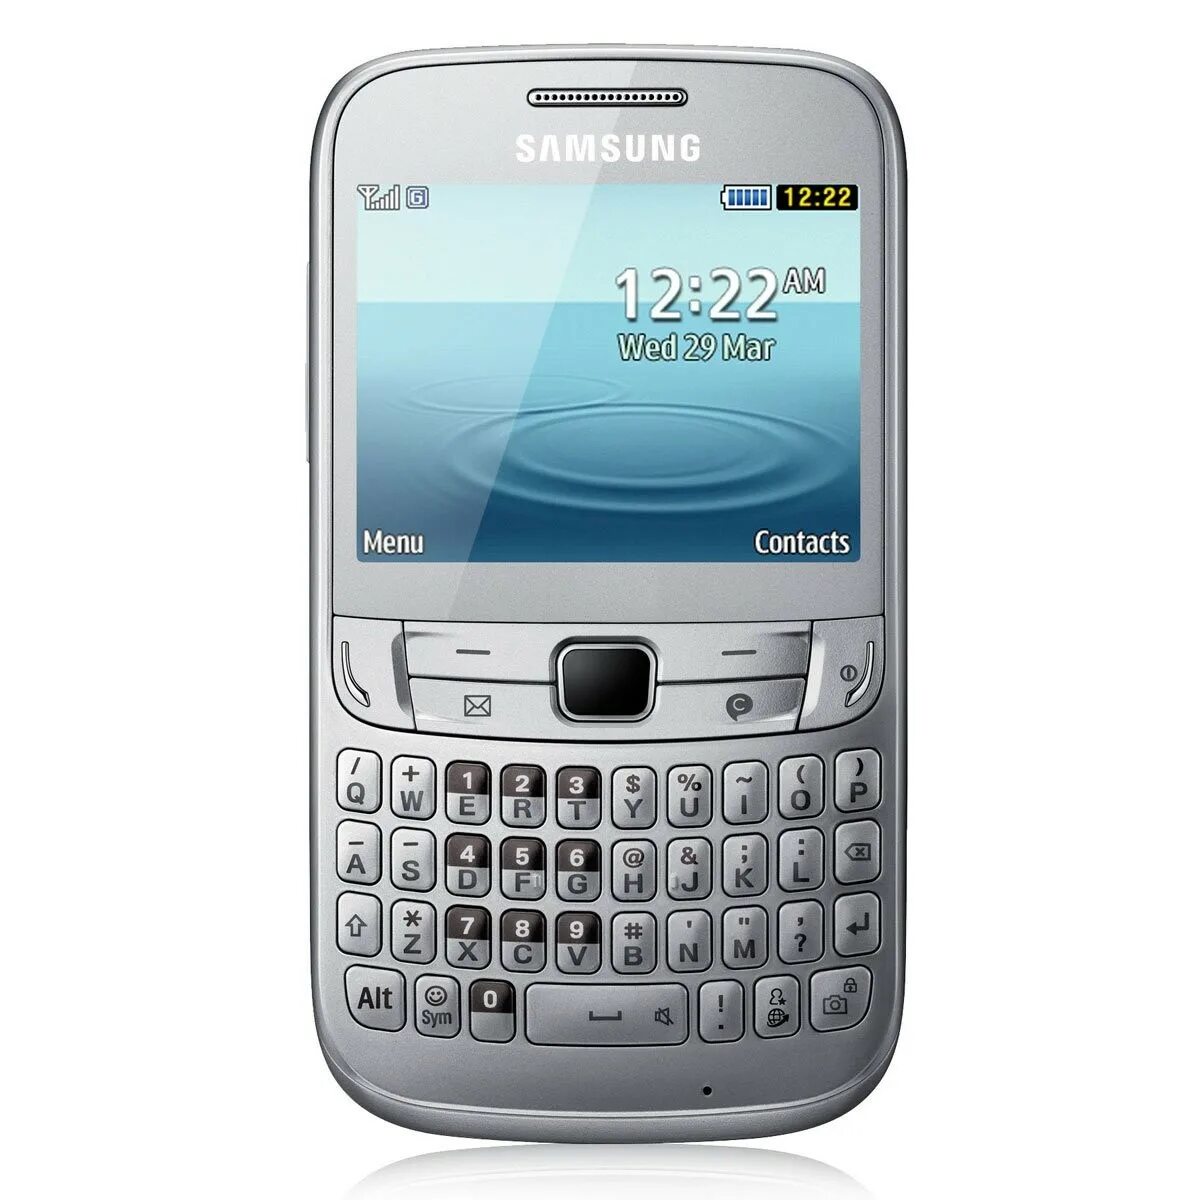 Samsung gsm. Кнопочный самсунг с кверти клавиатурой. Samsung 357. Samsung Duos QWERTY. Nokia Asha 205.